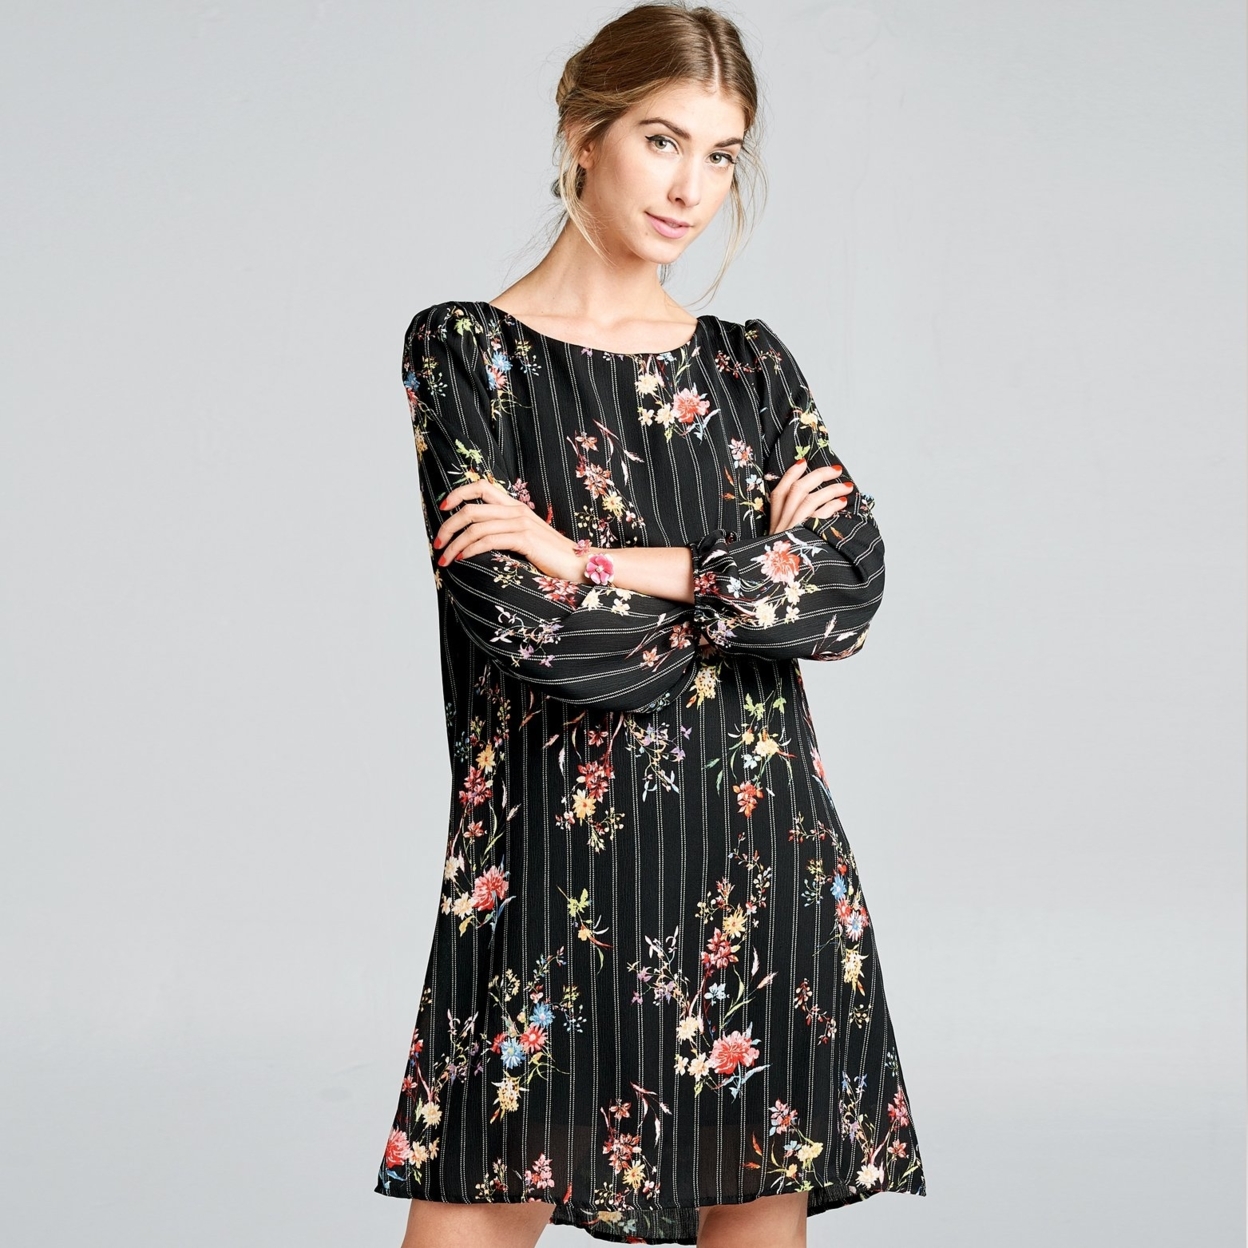 Floral Stripe Shift Dress - Black, Small (2-6)